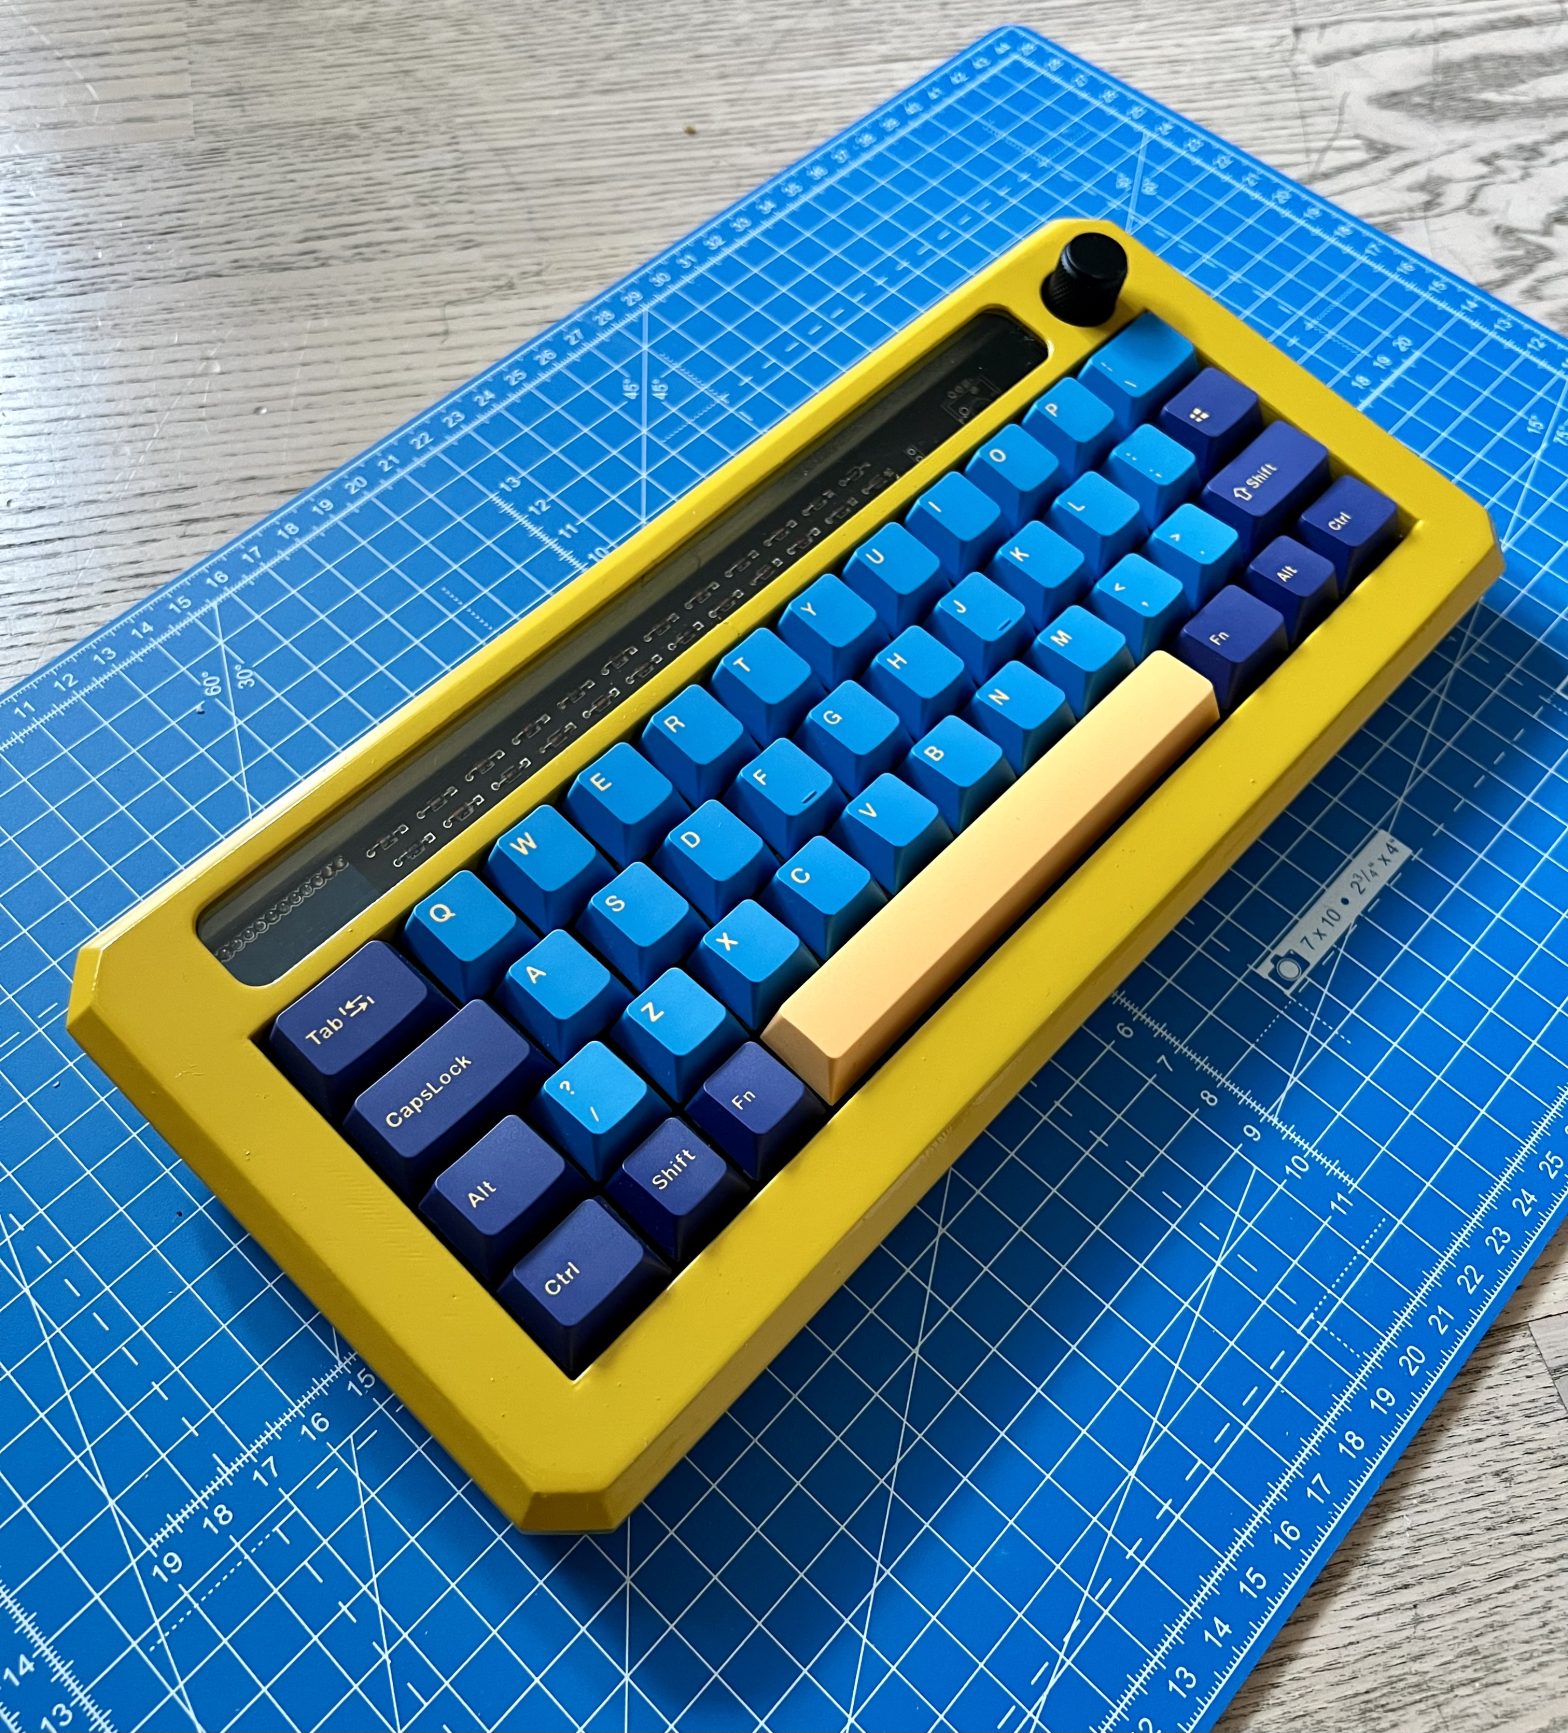 Printing Litl keyboard cases